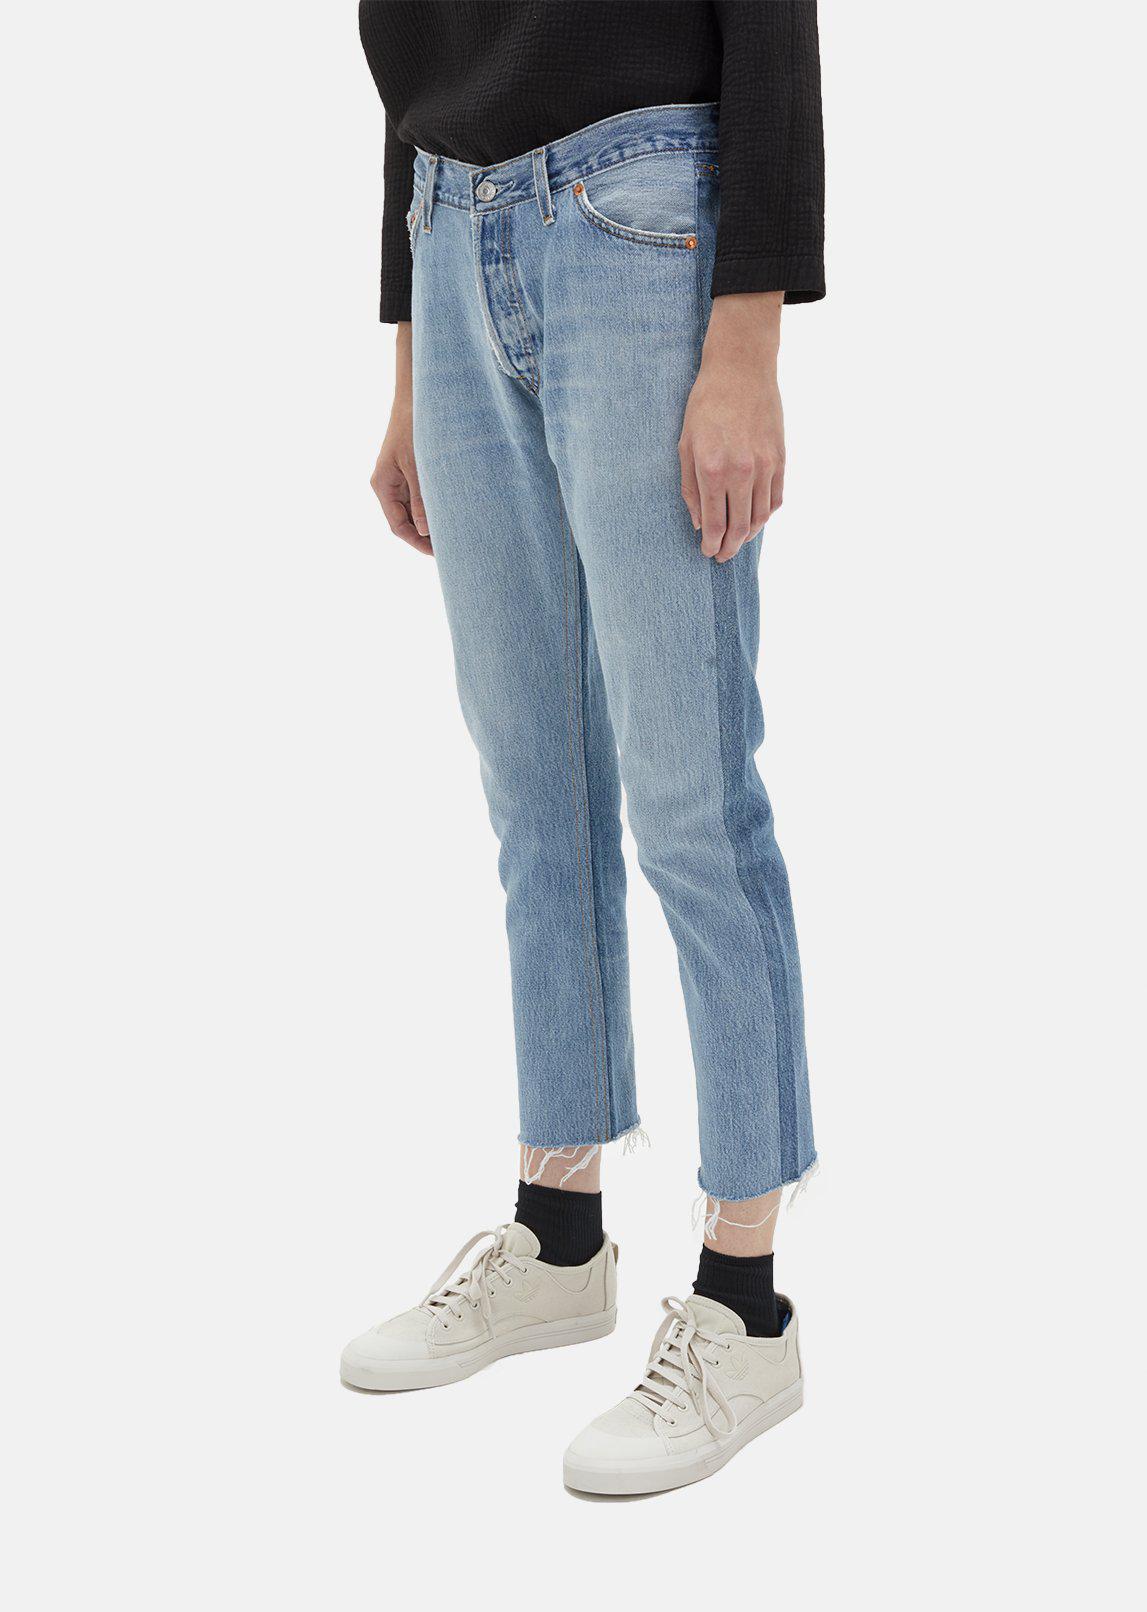 two tone jeans levis